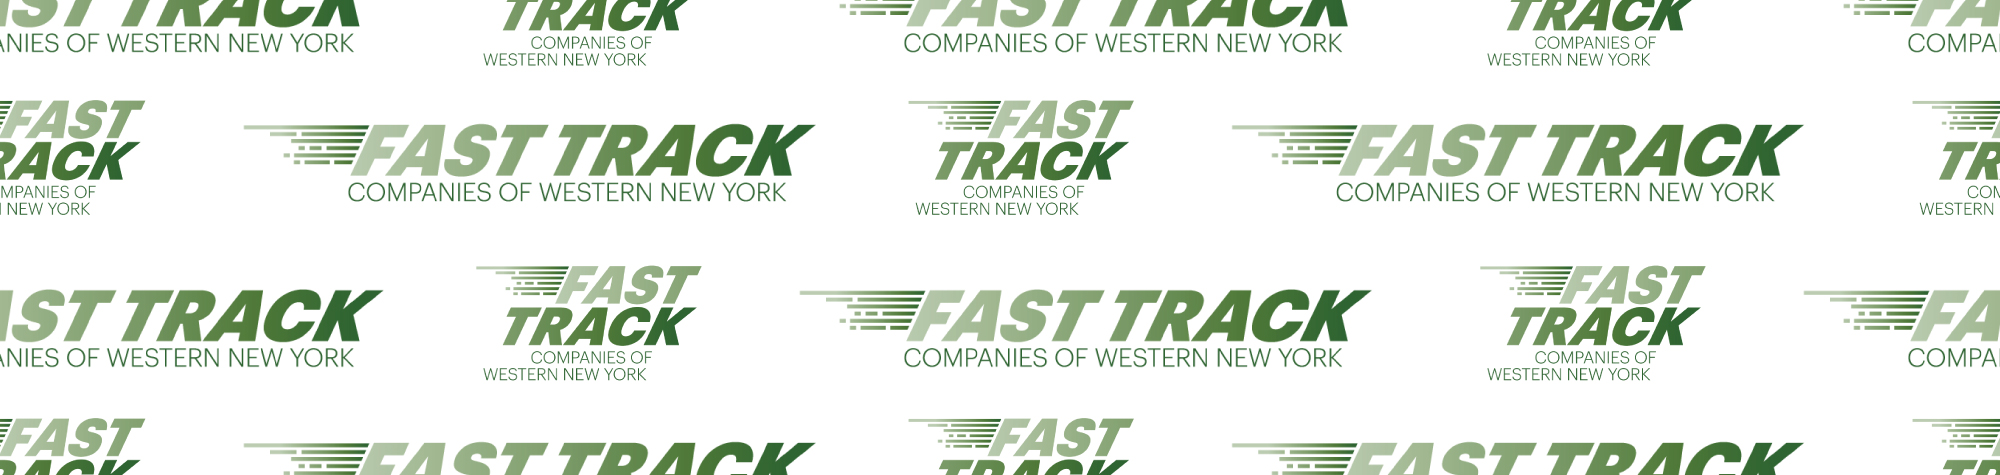 Merchants Insurance Group Named Buffalo Business First “Fast Track” Company